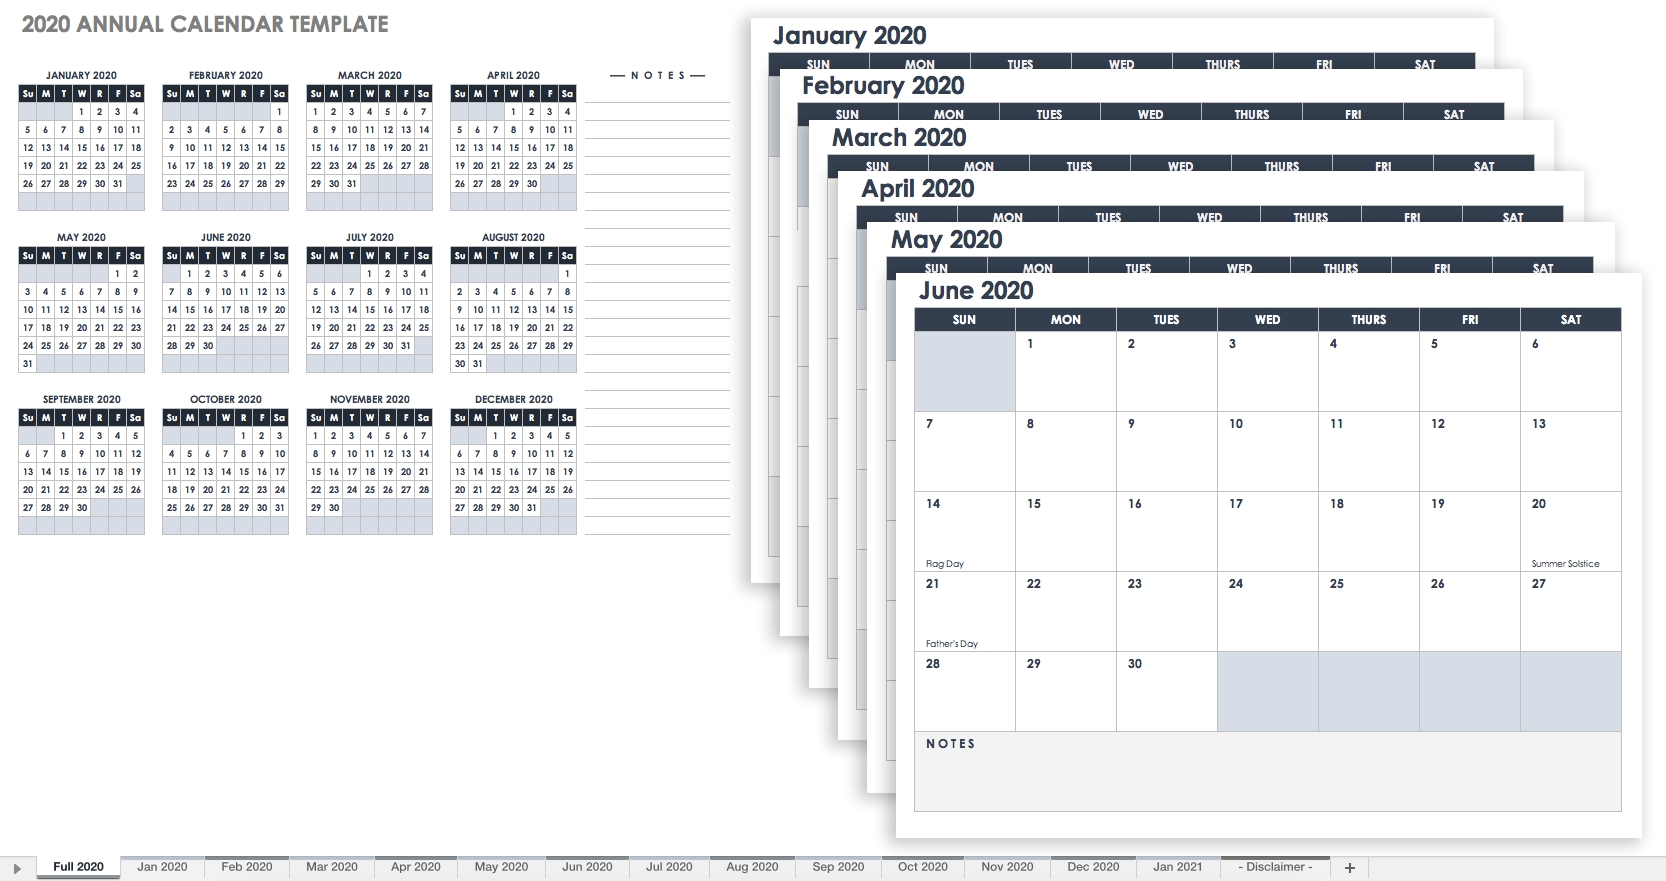 bi weekly pay schedule 2020 template calendar template